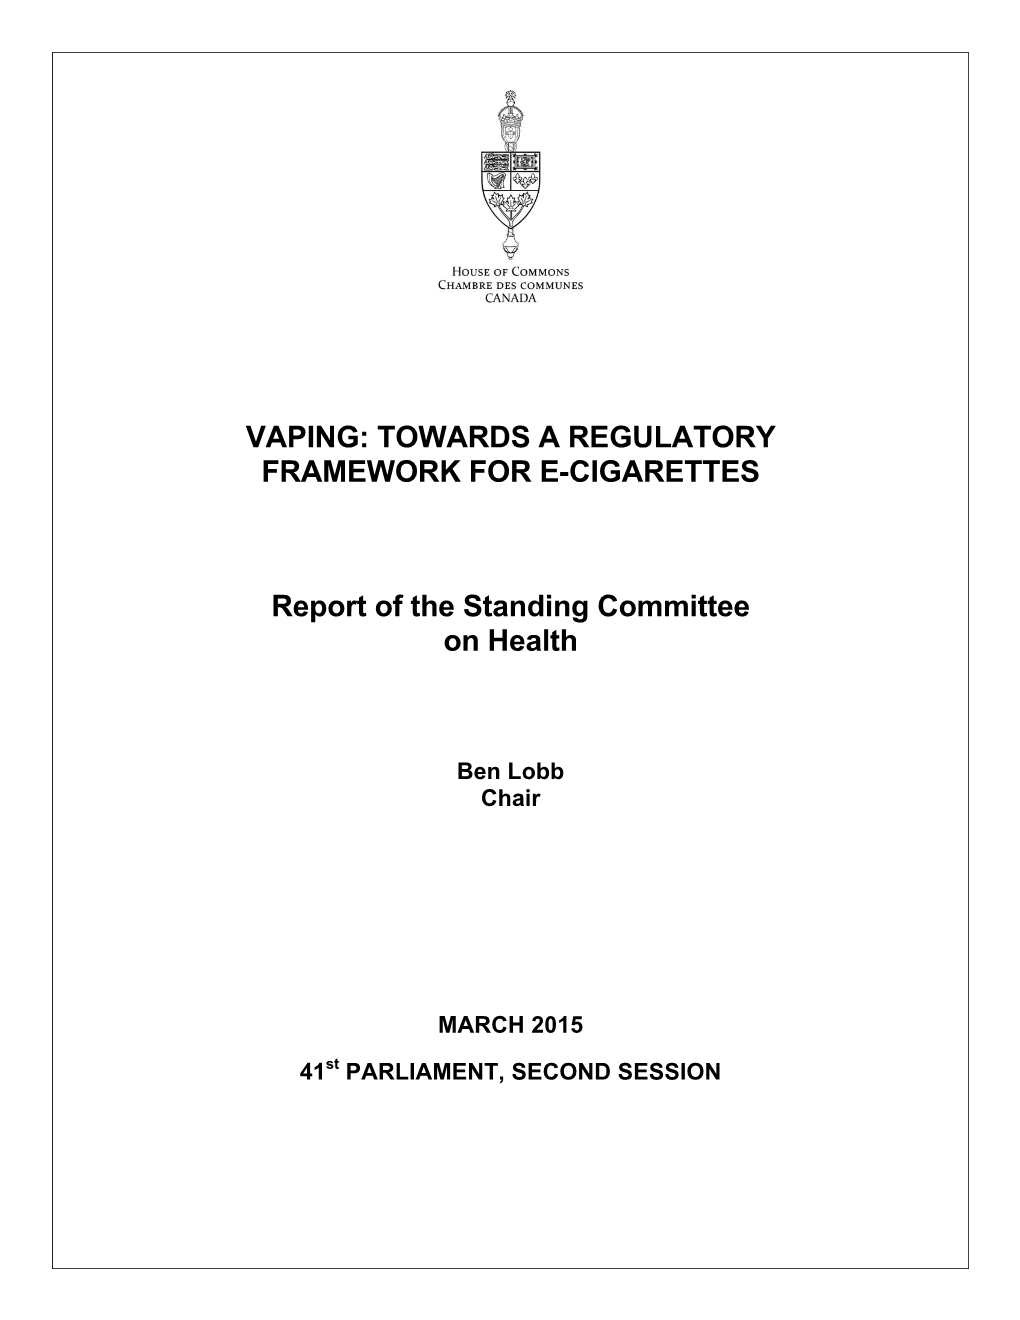 Vaping: Towards a Regulatory Framework for E-Cigarettes